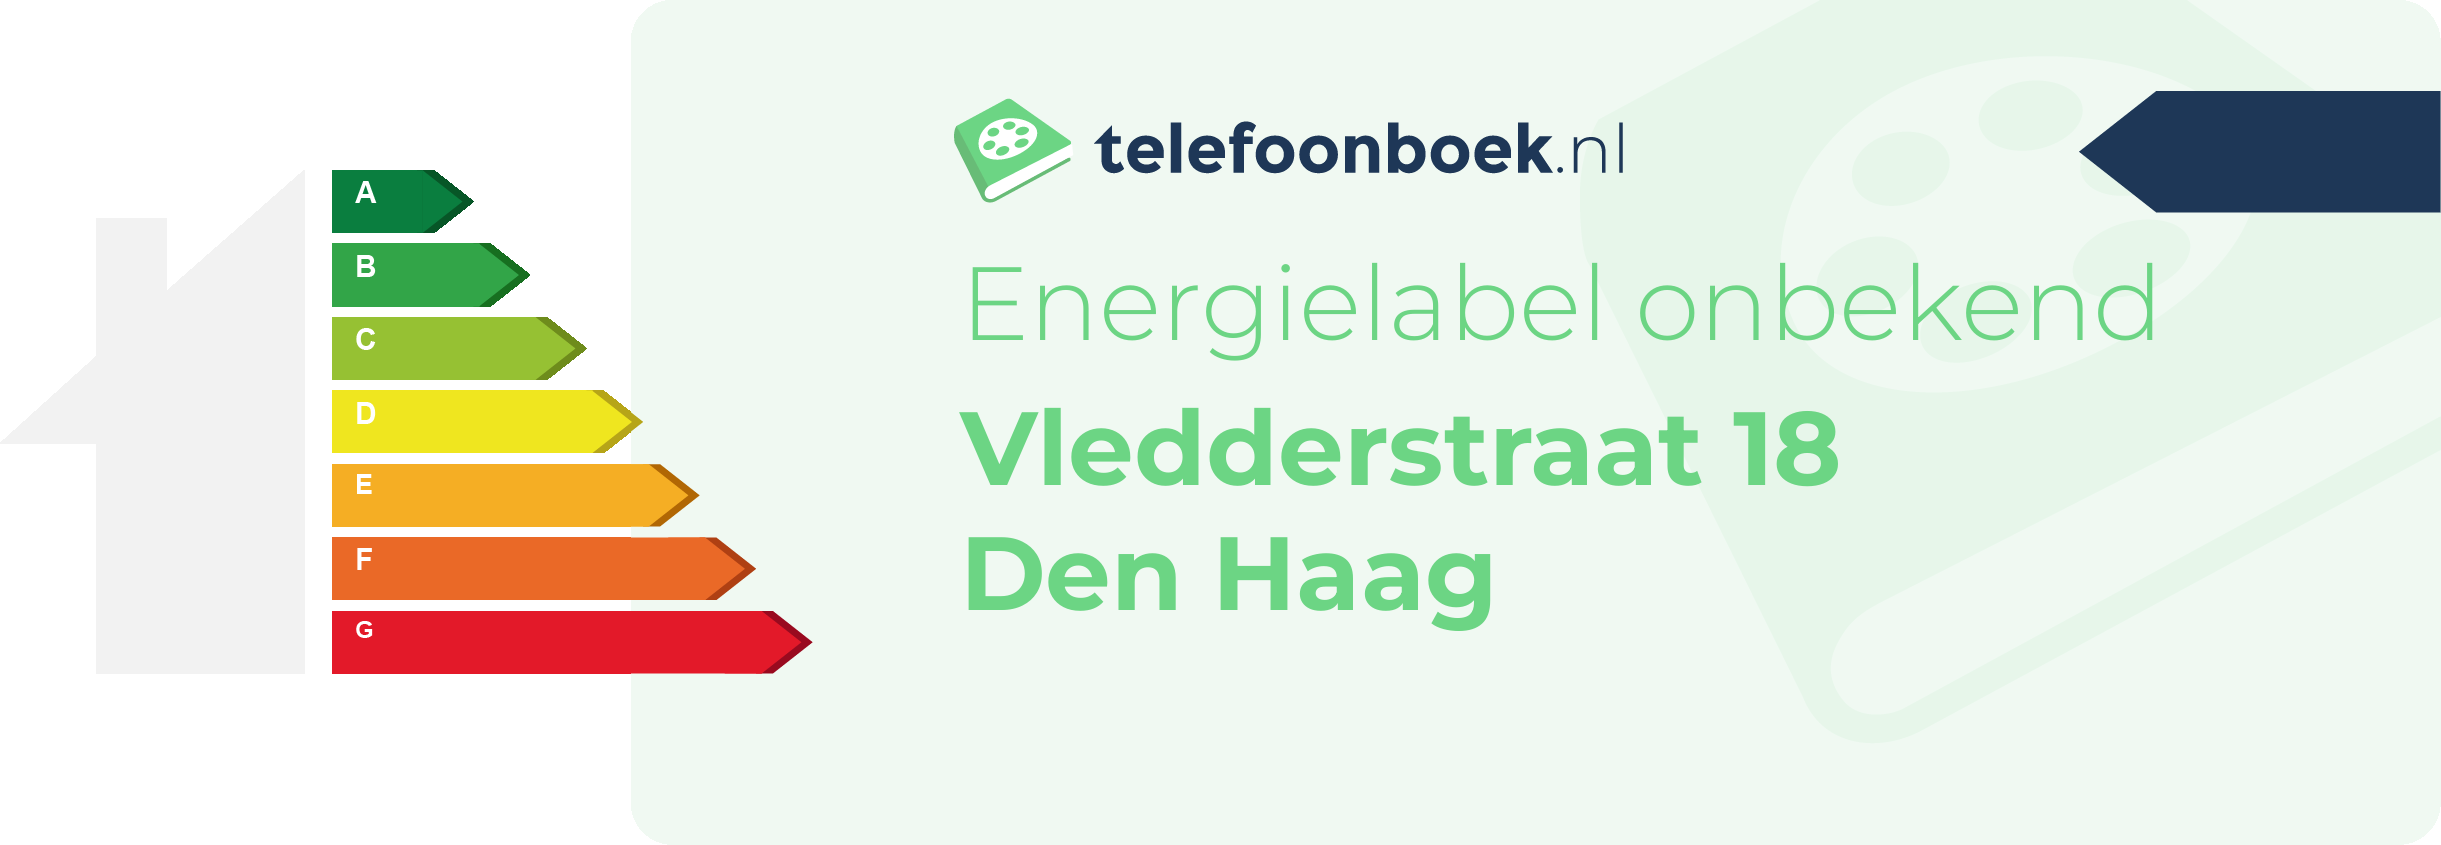 Energielabel Vledderstraat 18 Den Haag